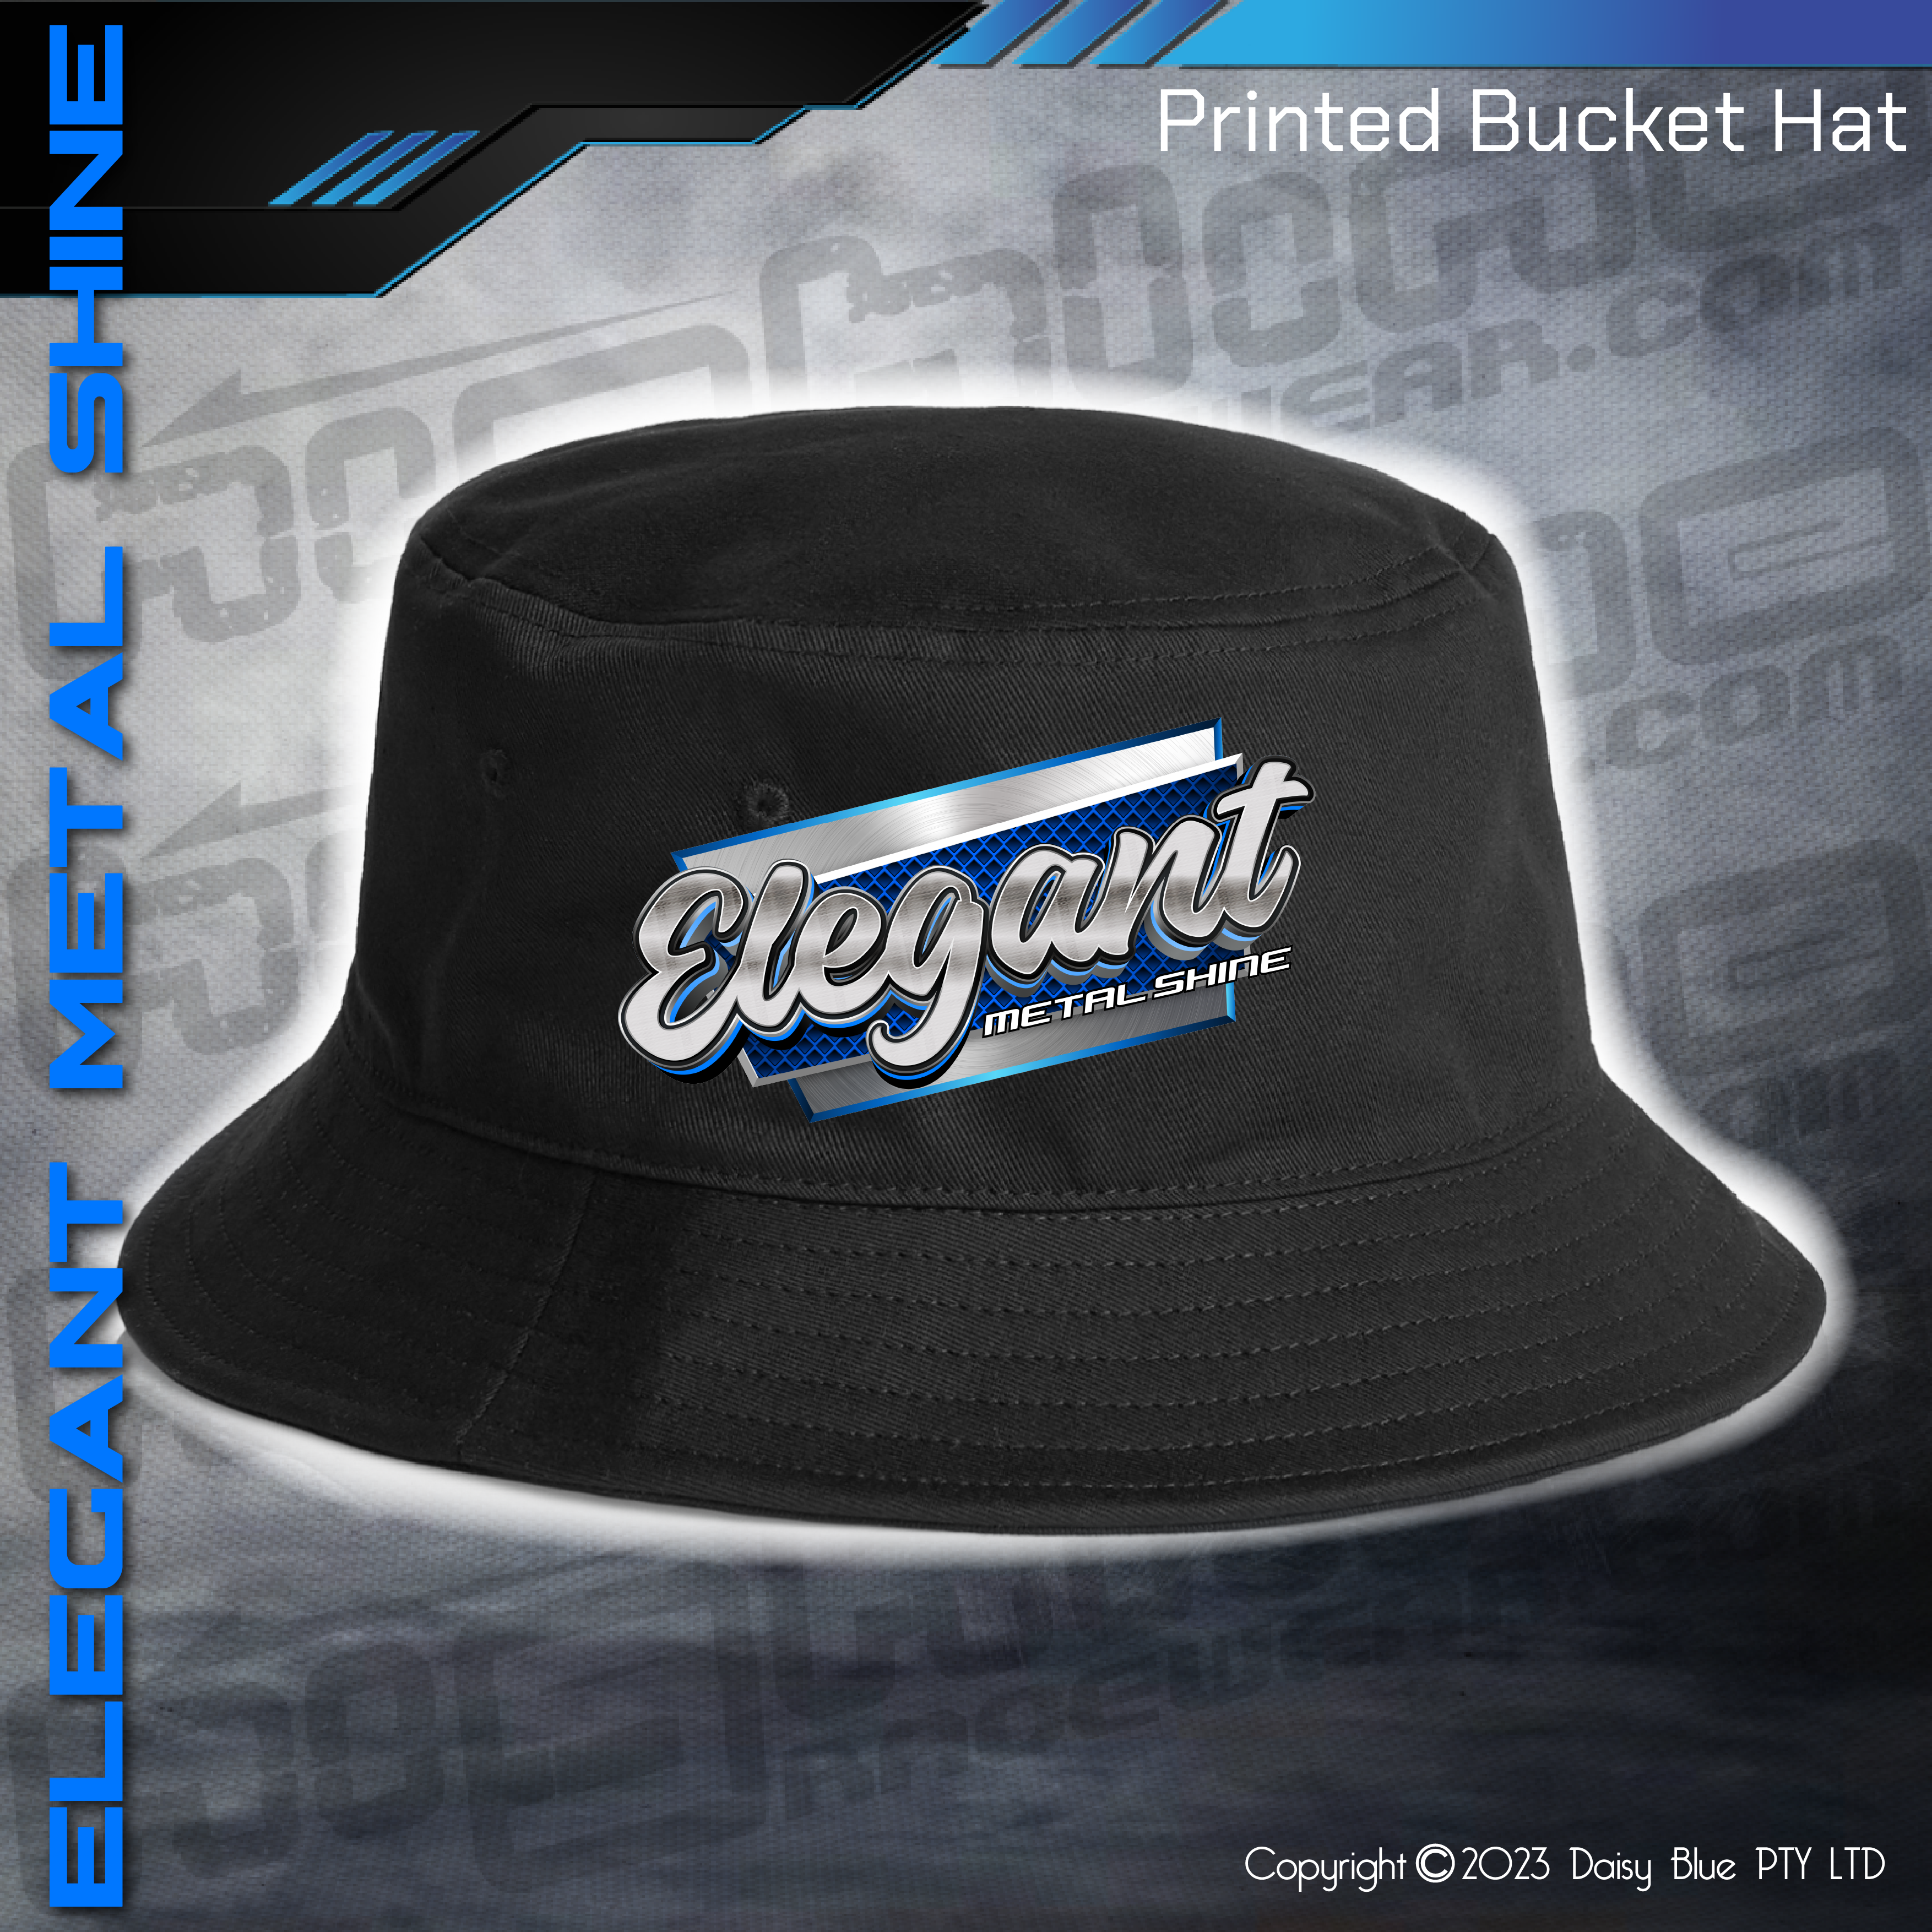 Printed Bucket Hat - Elegant Metal Shine – Highline Racewear